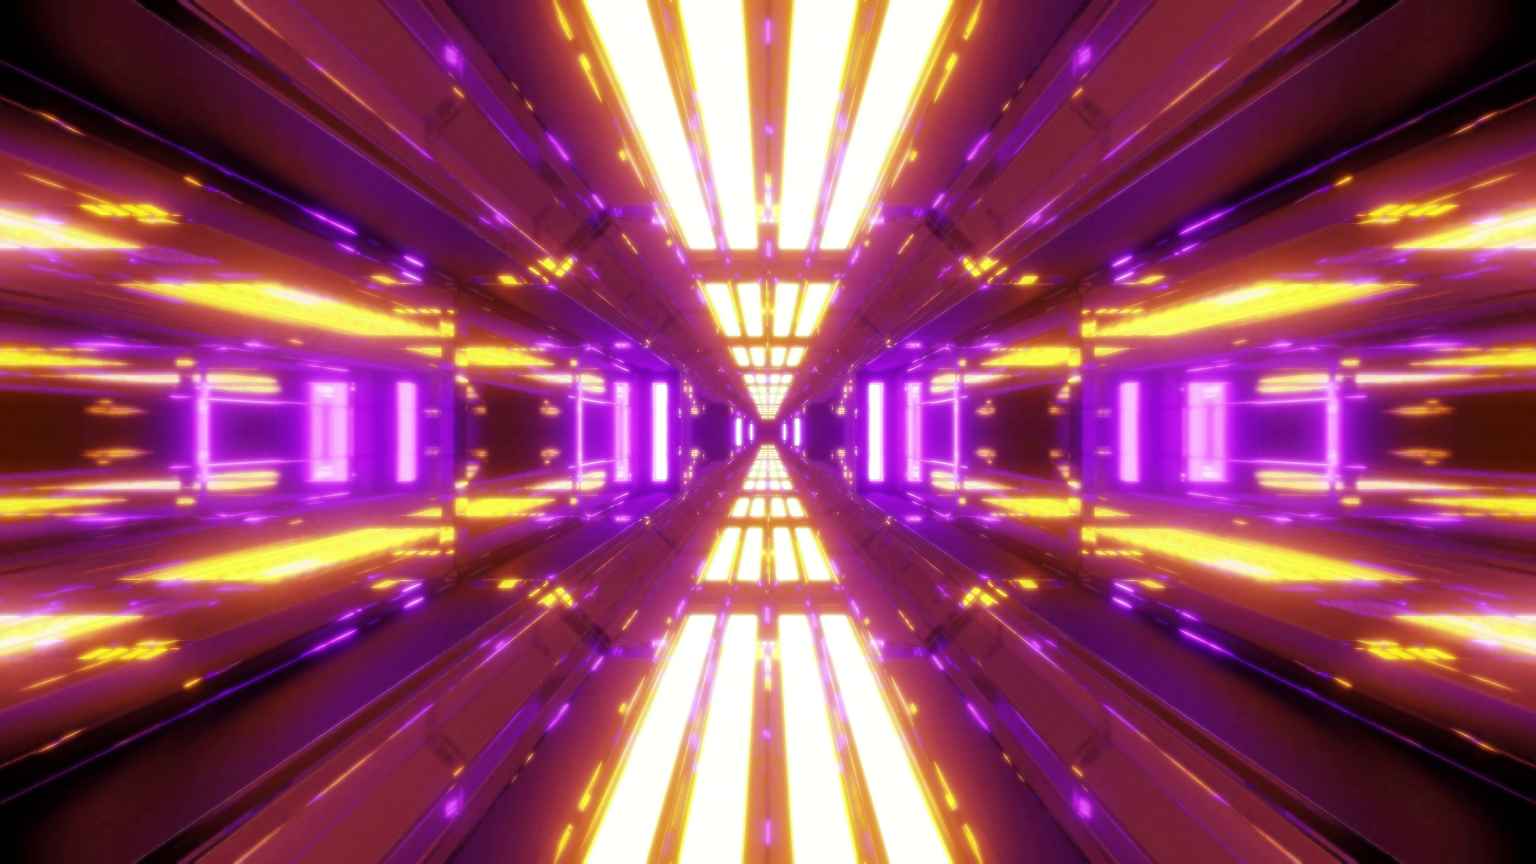 4K Light Tunnel Motion Background || Free To Use Video || VFX 4K Screensaver